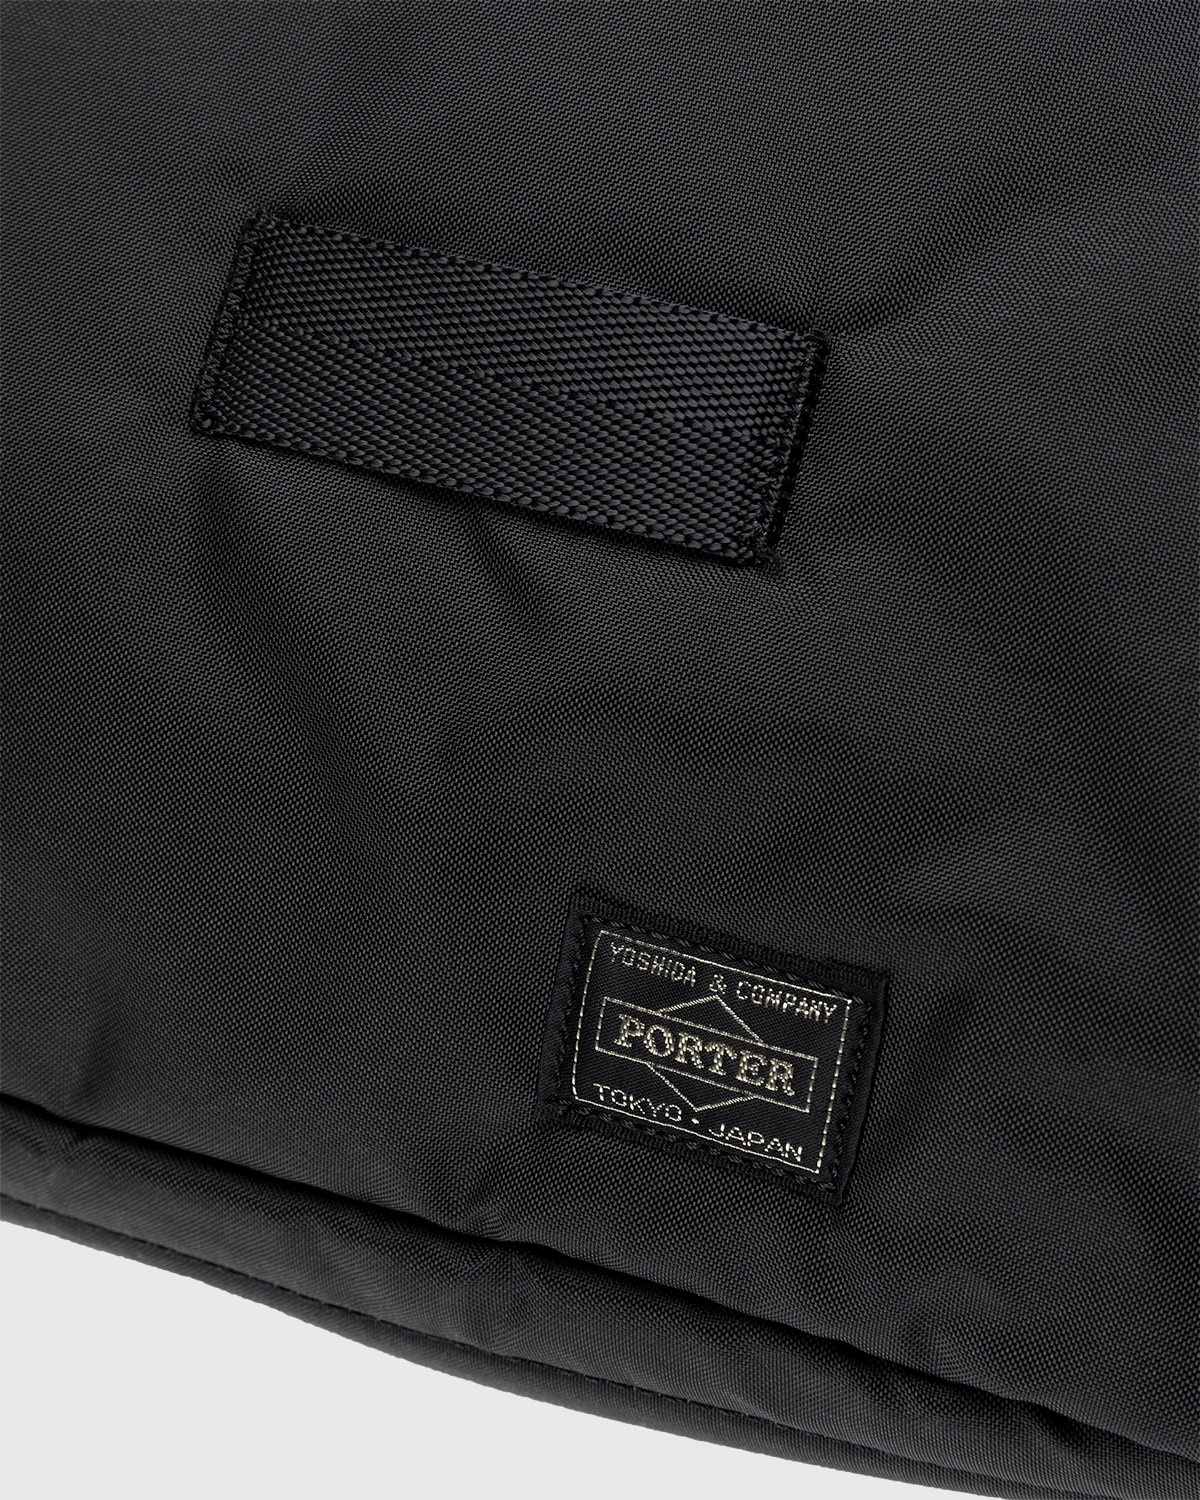 Porter-Yoshida & Co. – 2-Way Tote Bag Black - Bags - Black - Image 6